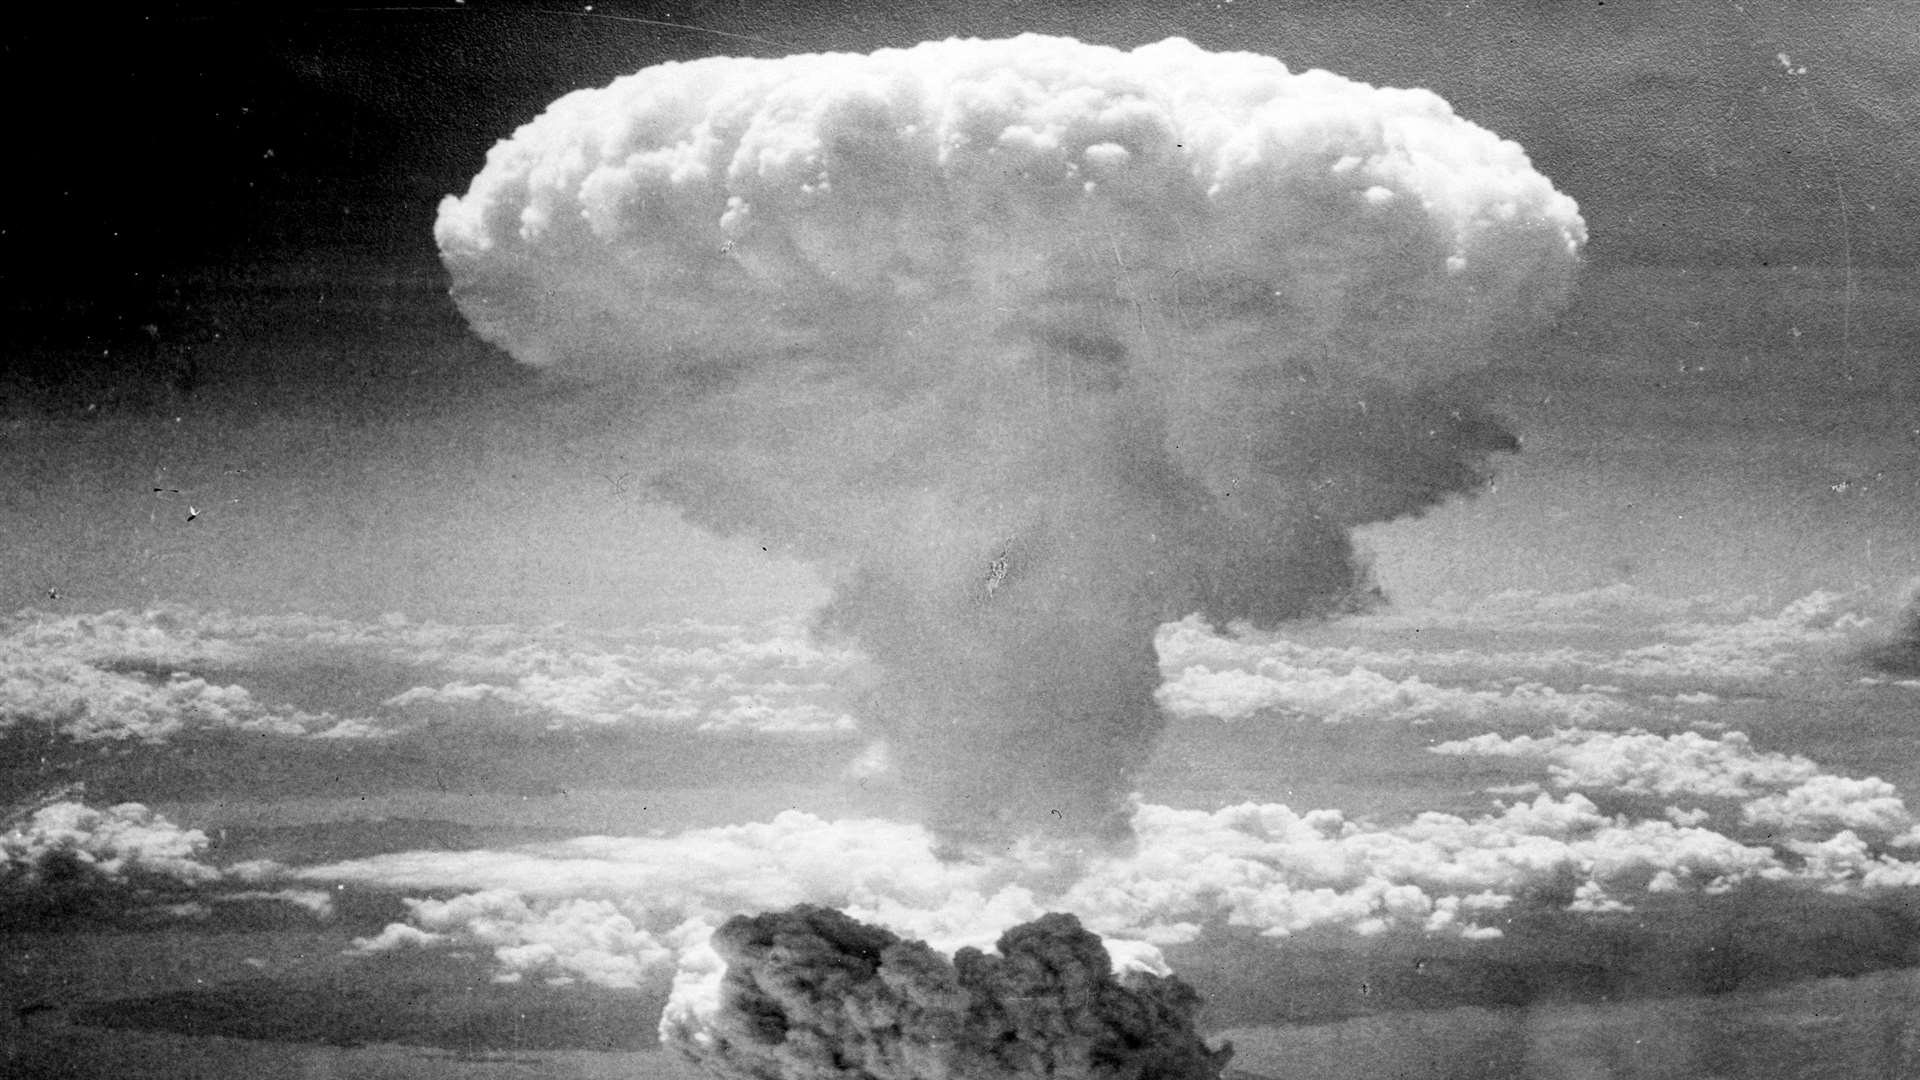 The nuclear bomb hitting Nagasaki